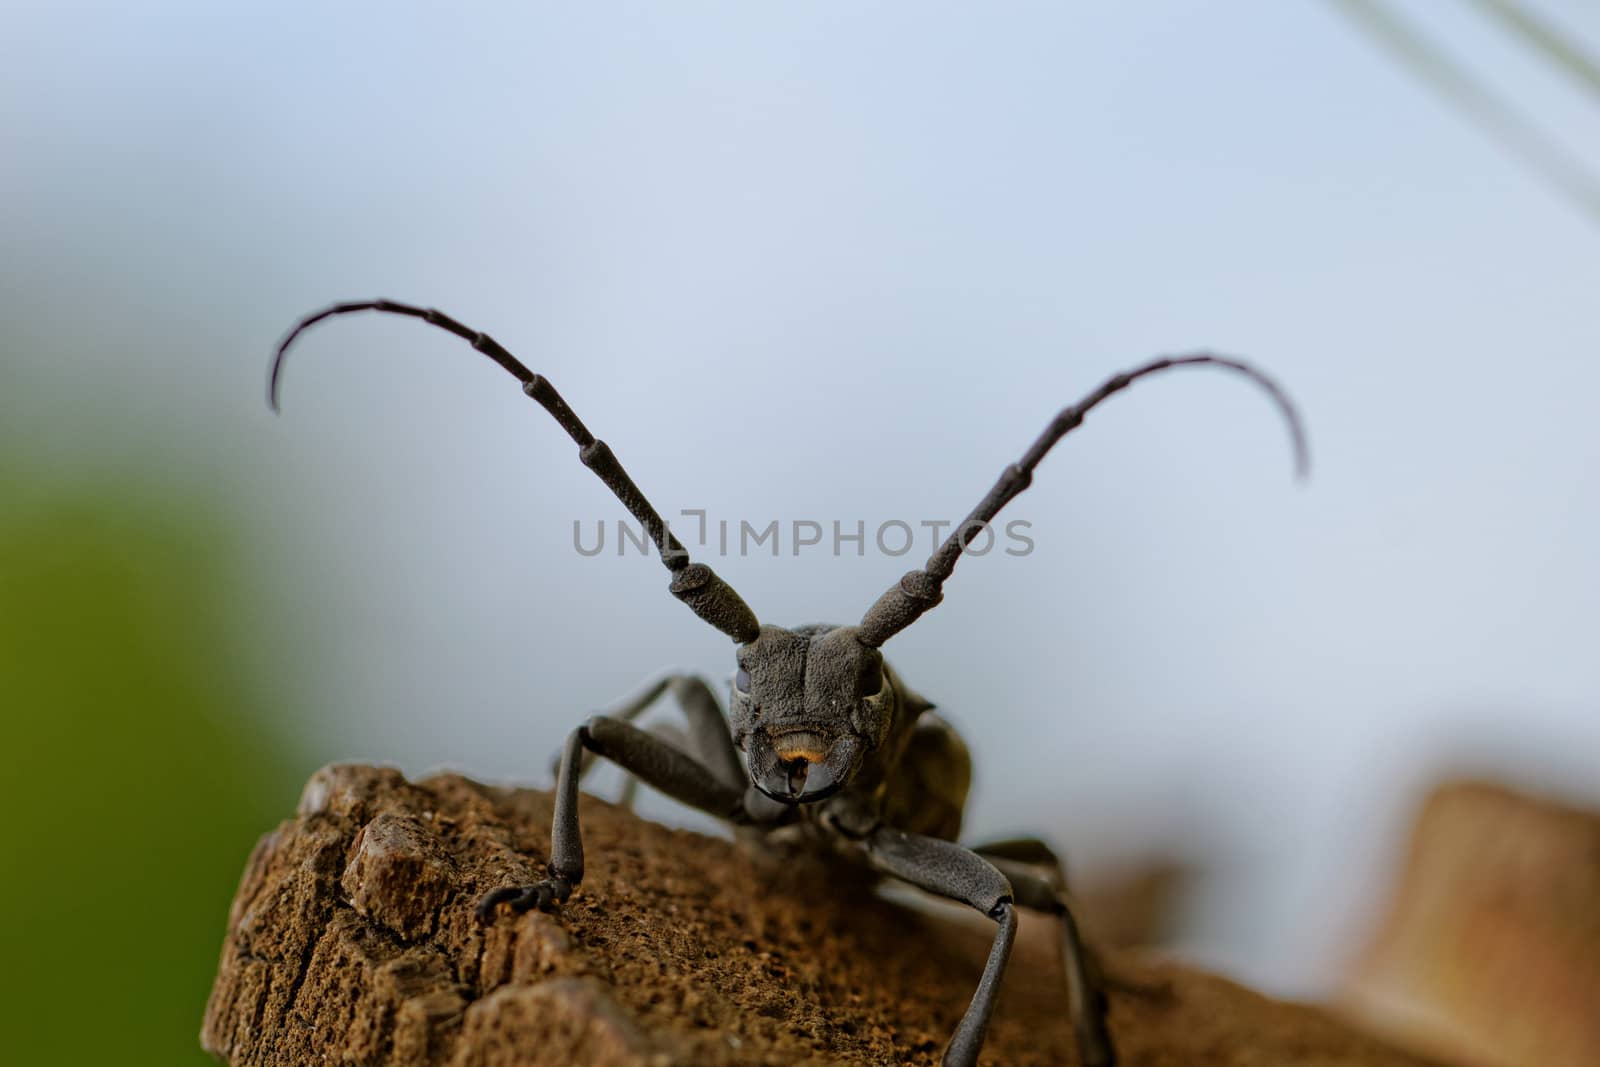 The Capricorn Beetle by NagyDodo